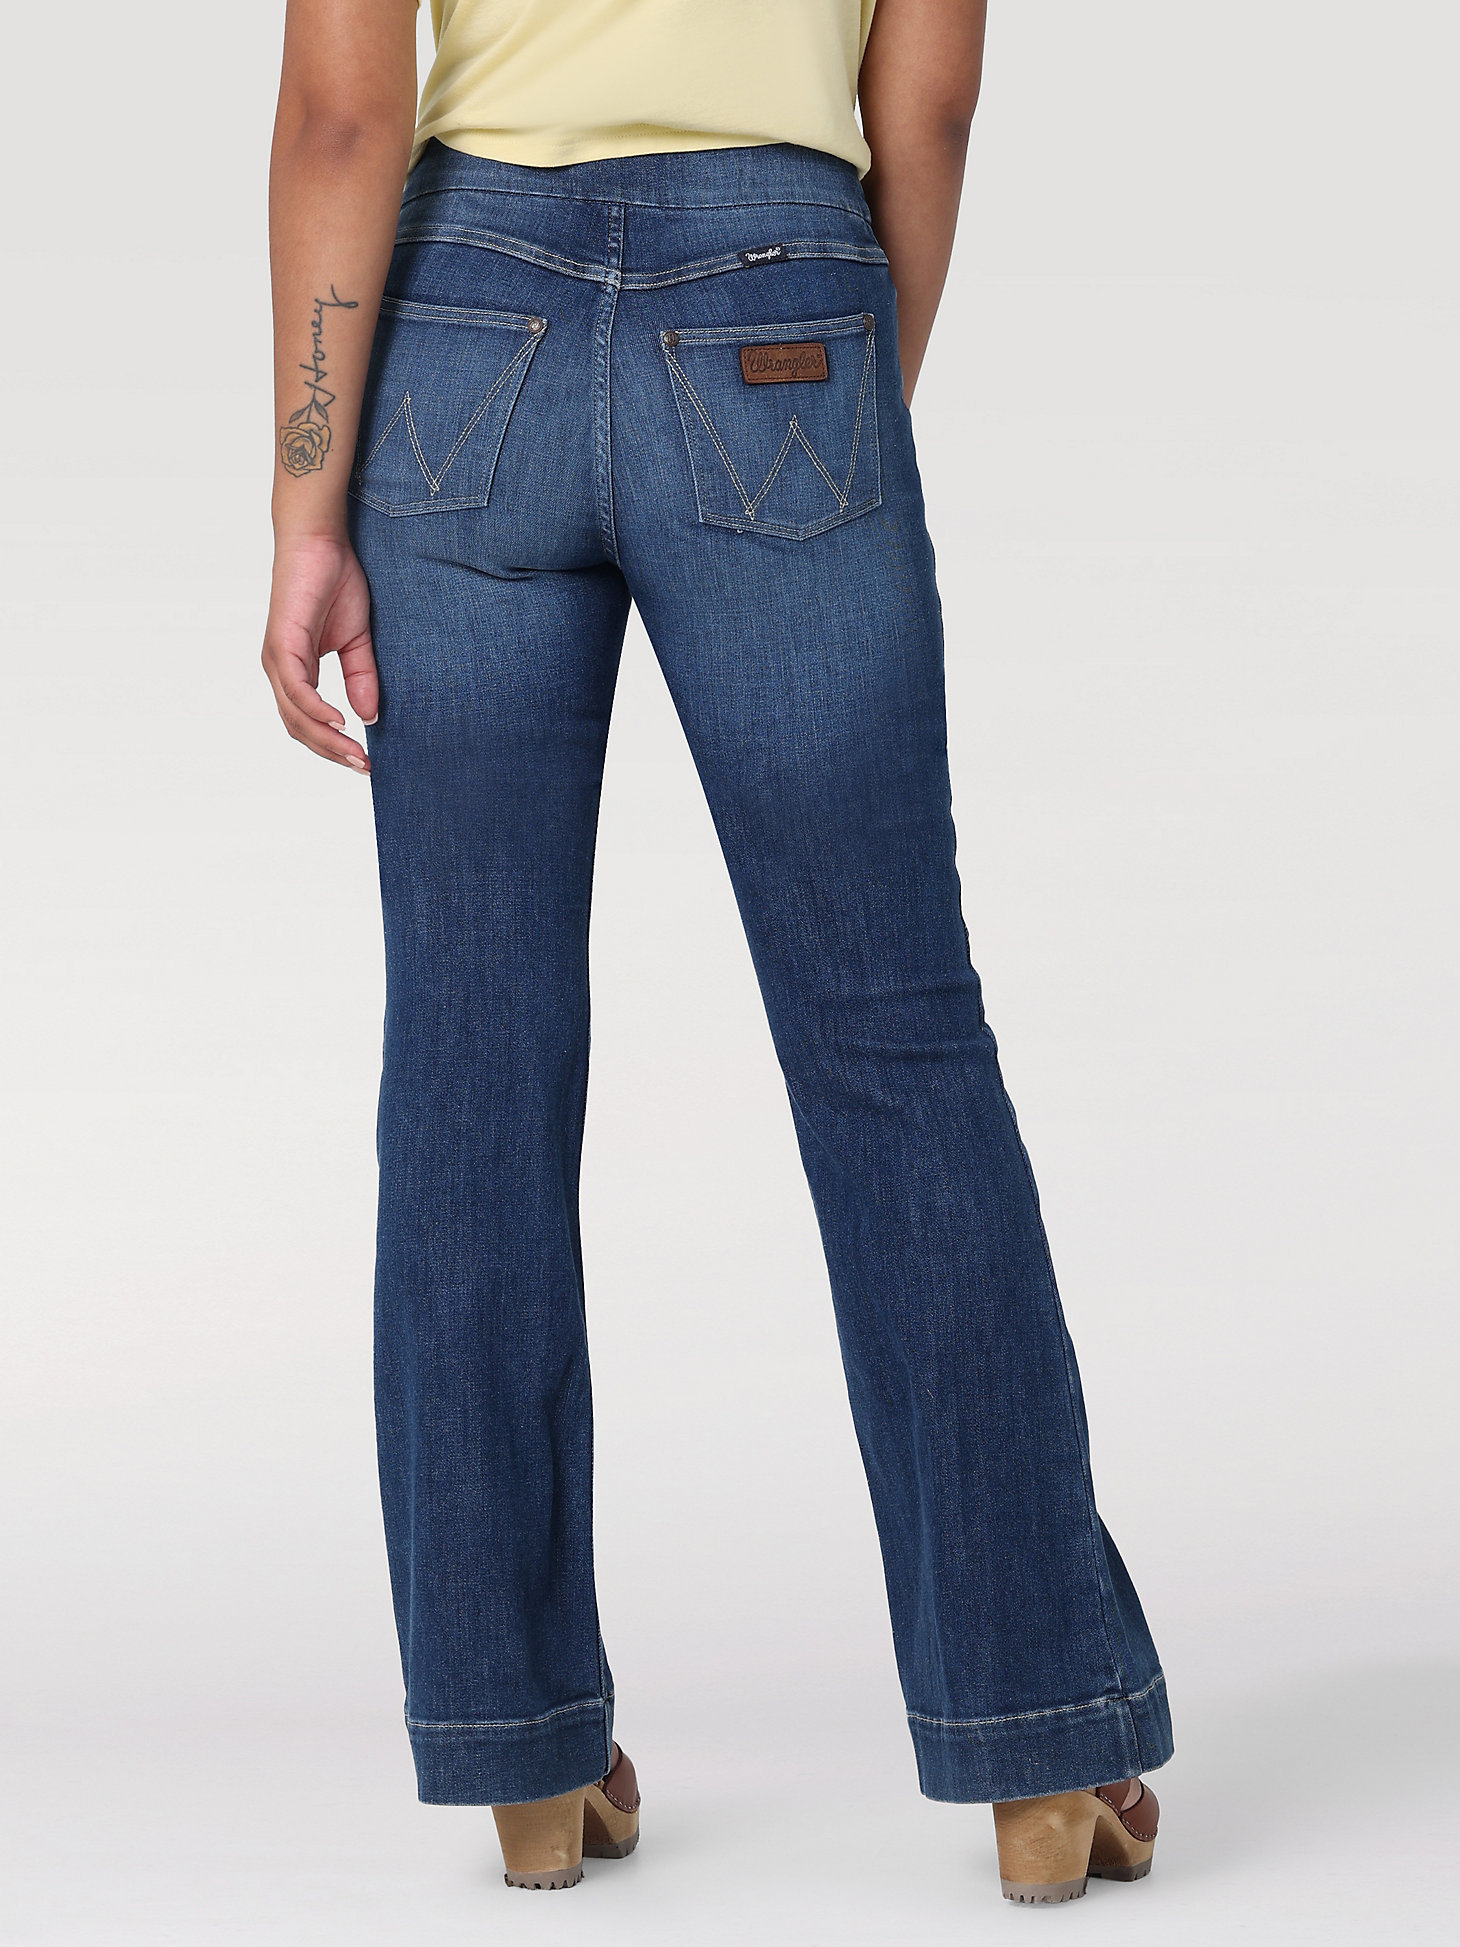 Women's Wrangler Retro® Pull On High Rise Trouser Jean in Stacie alternative view 1